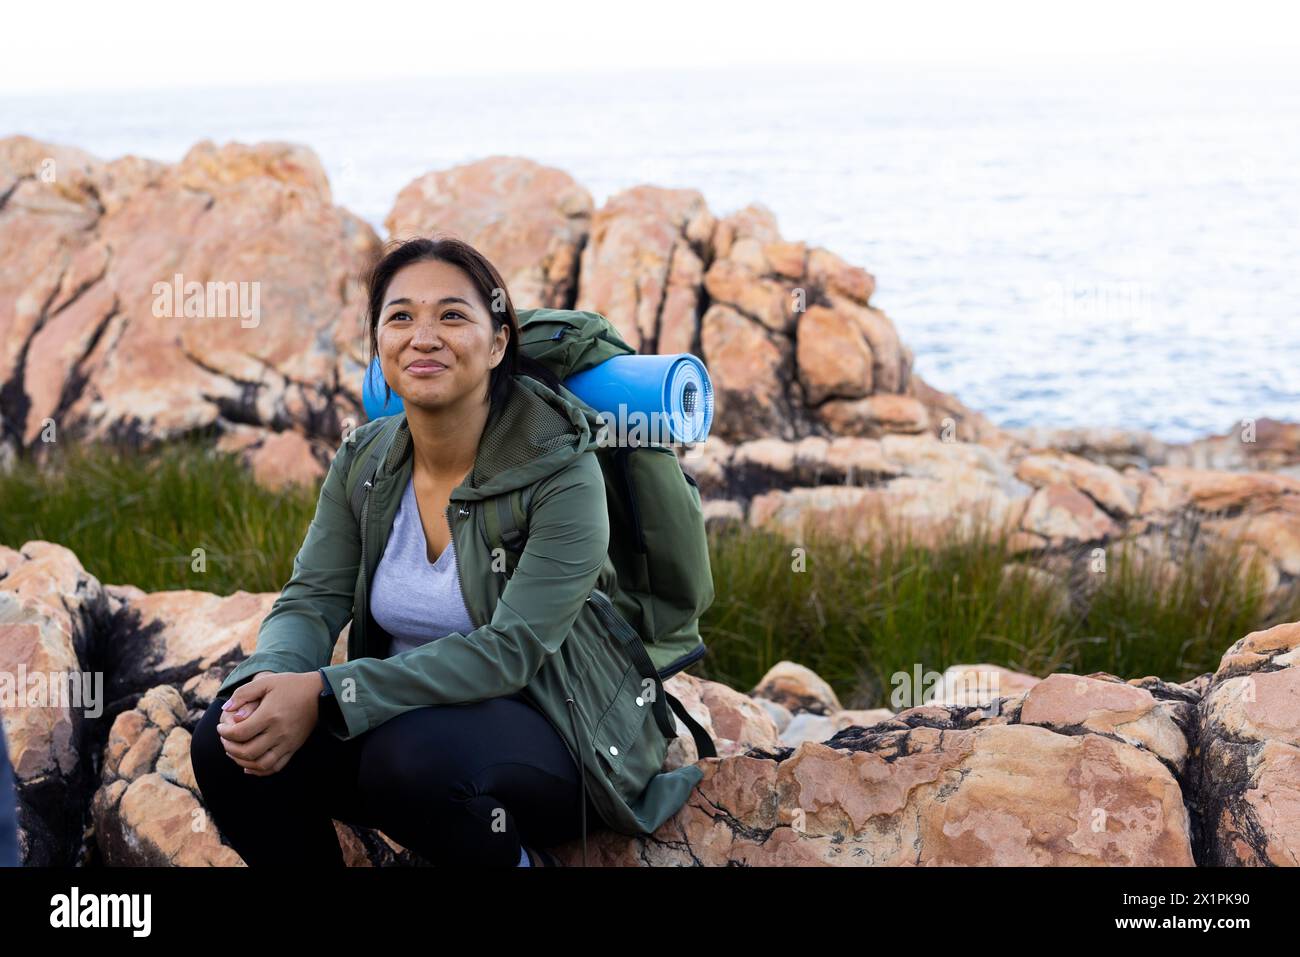 Biracial female hiker sitting on rocks, enjoying nature, copy space Stock Photo